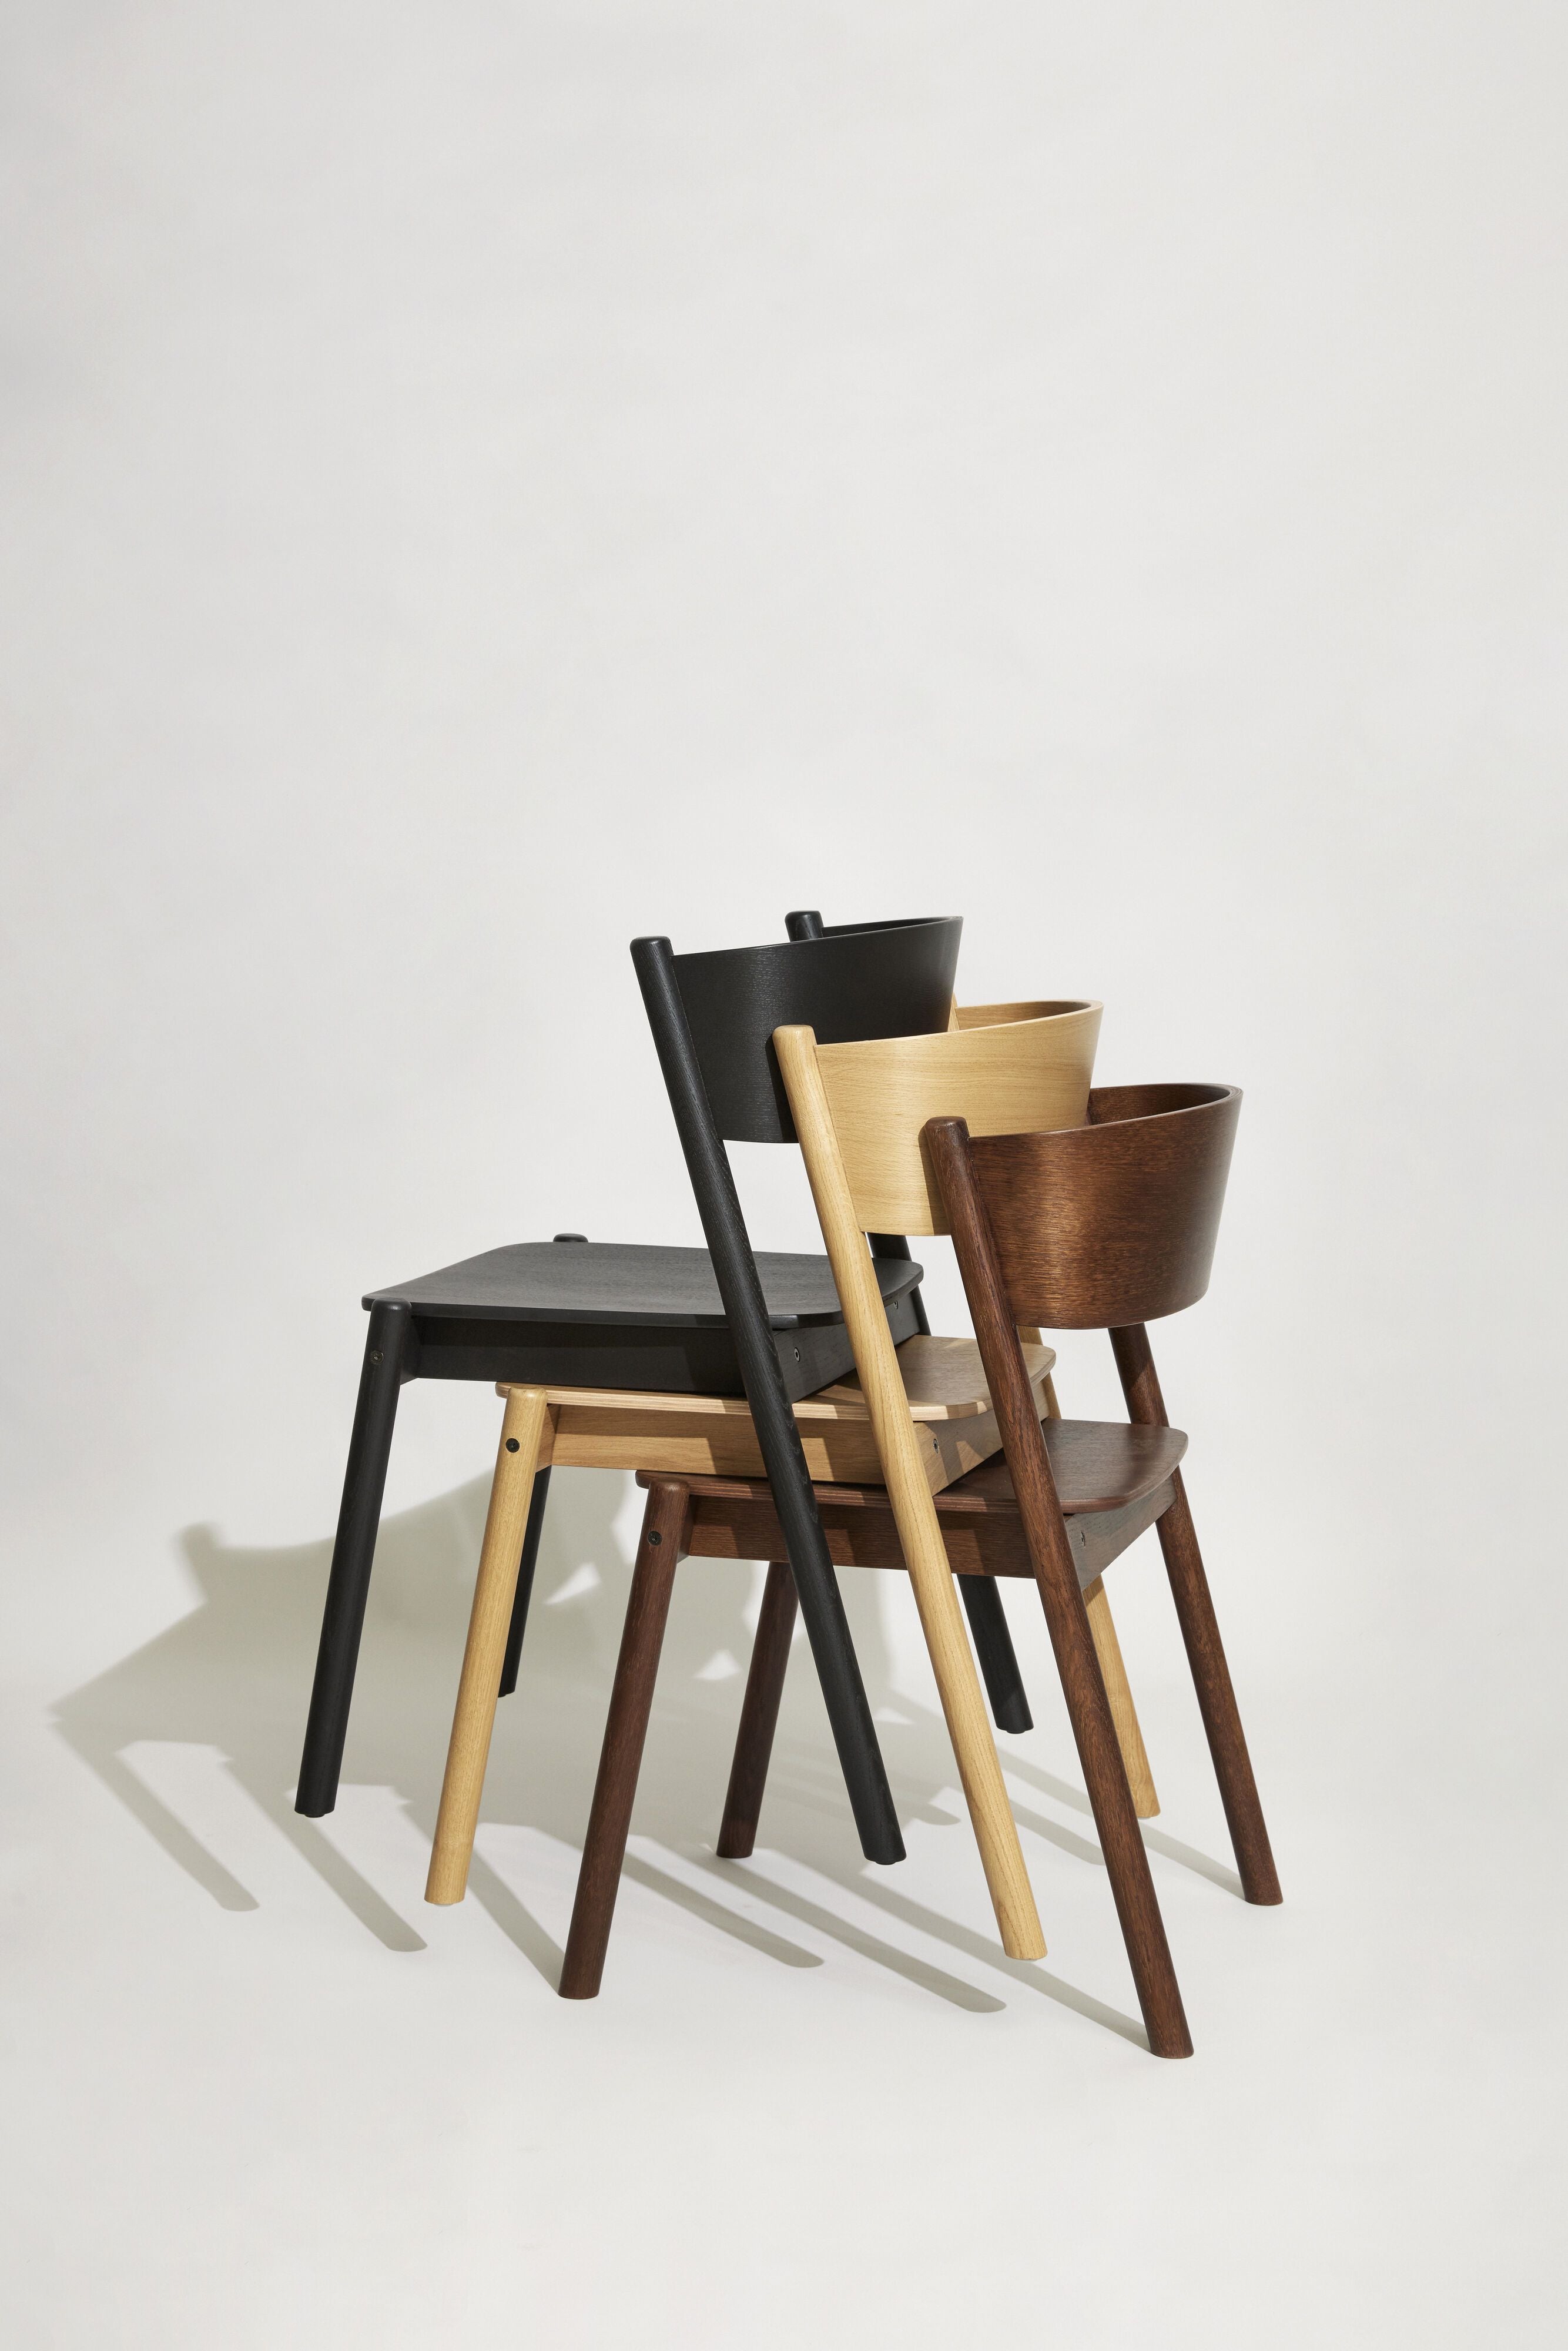 Hübsch Oblique Dining Chair, Black